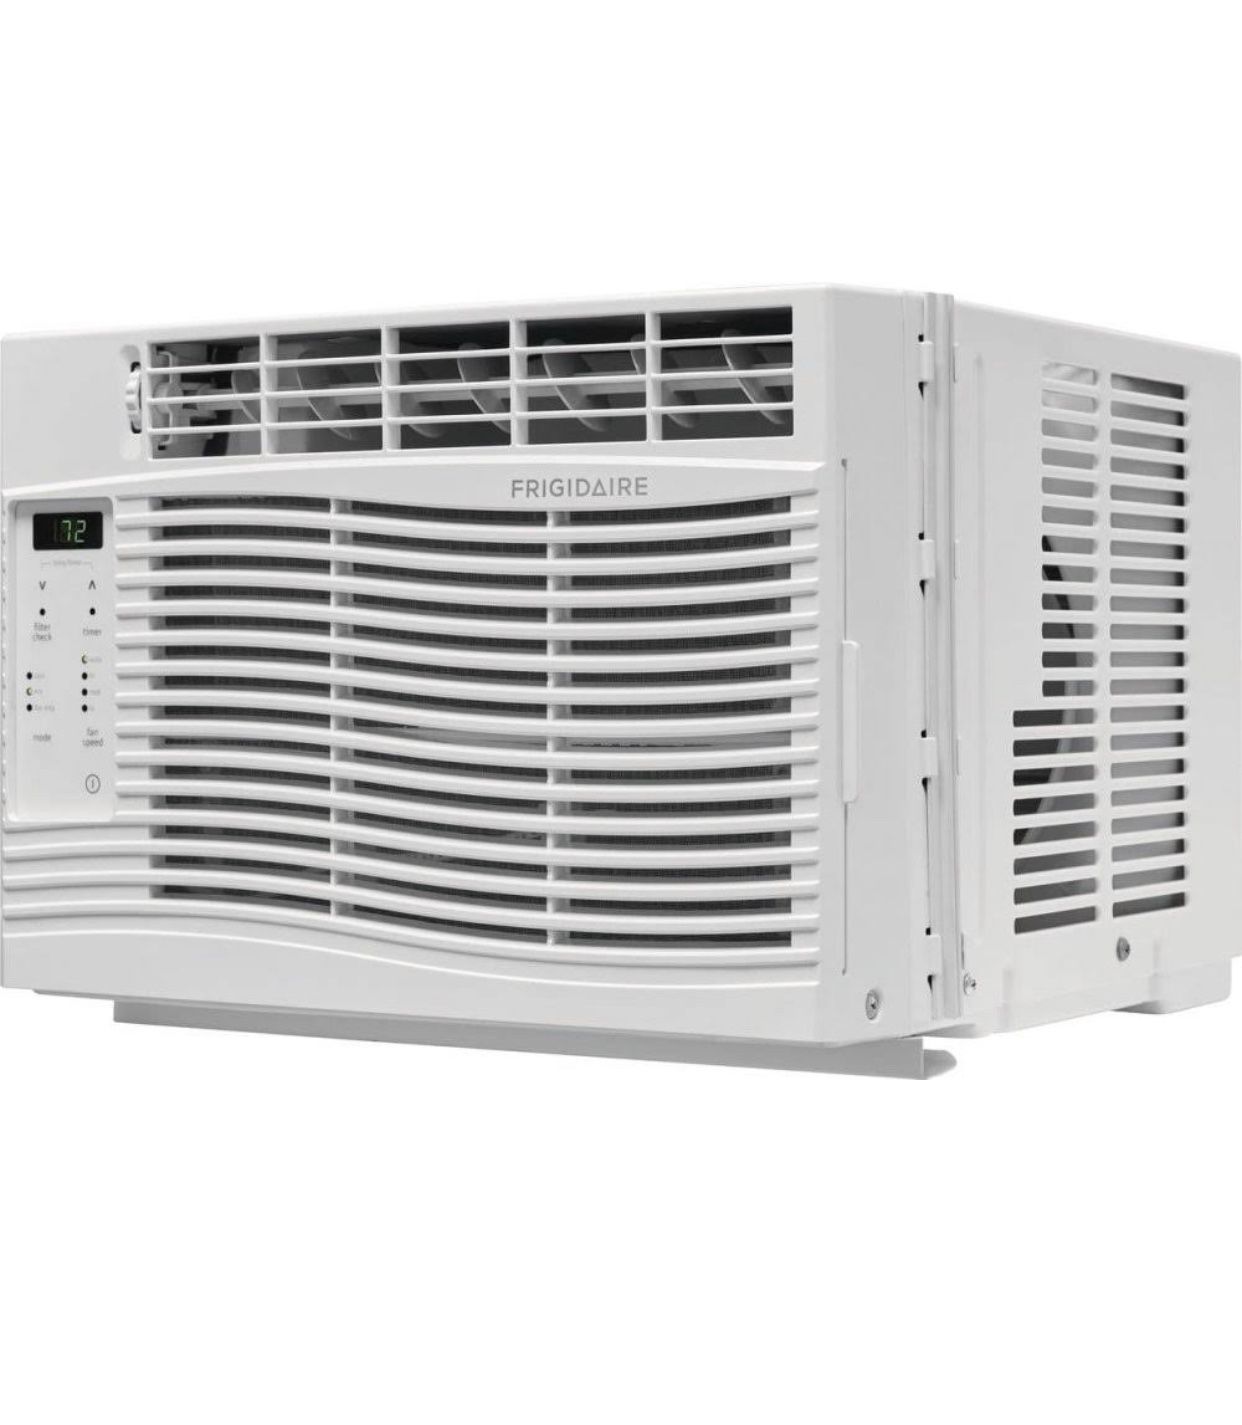 New in box Frigidaire 5,000 btu window air conditioner